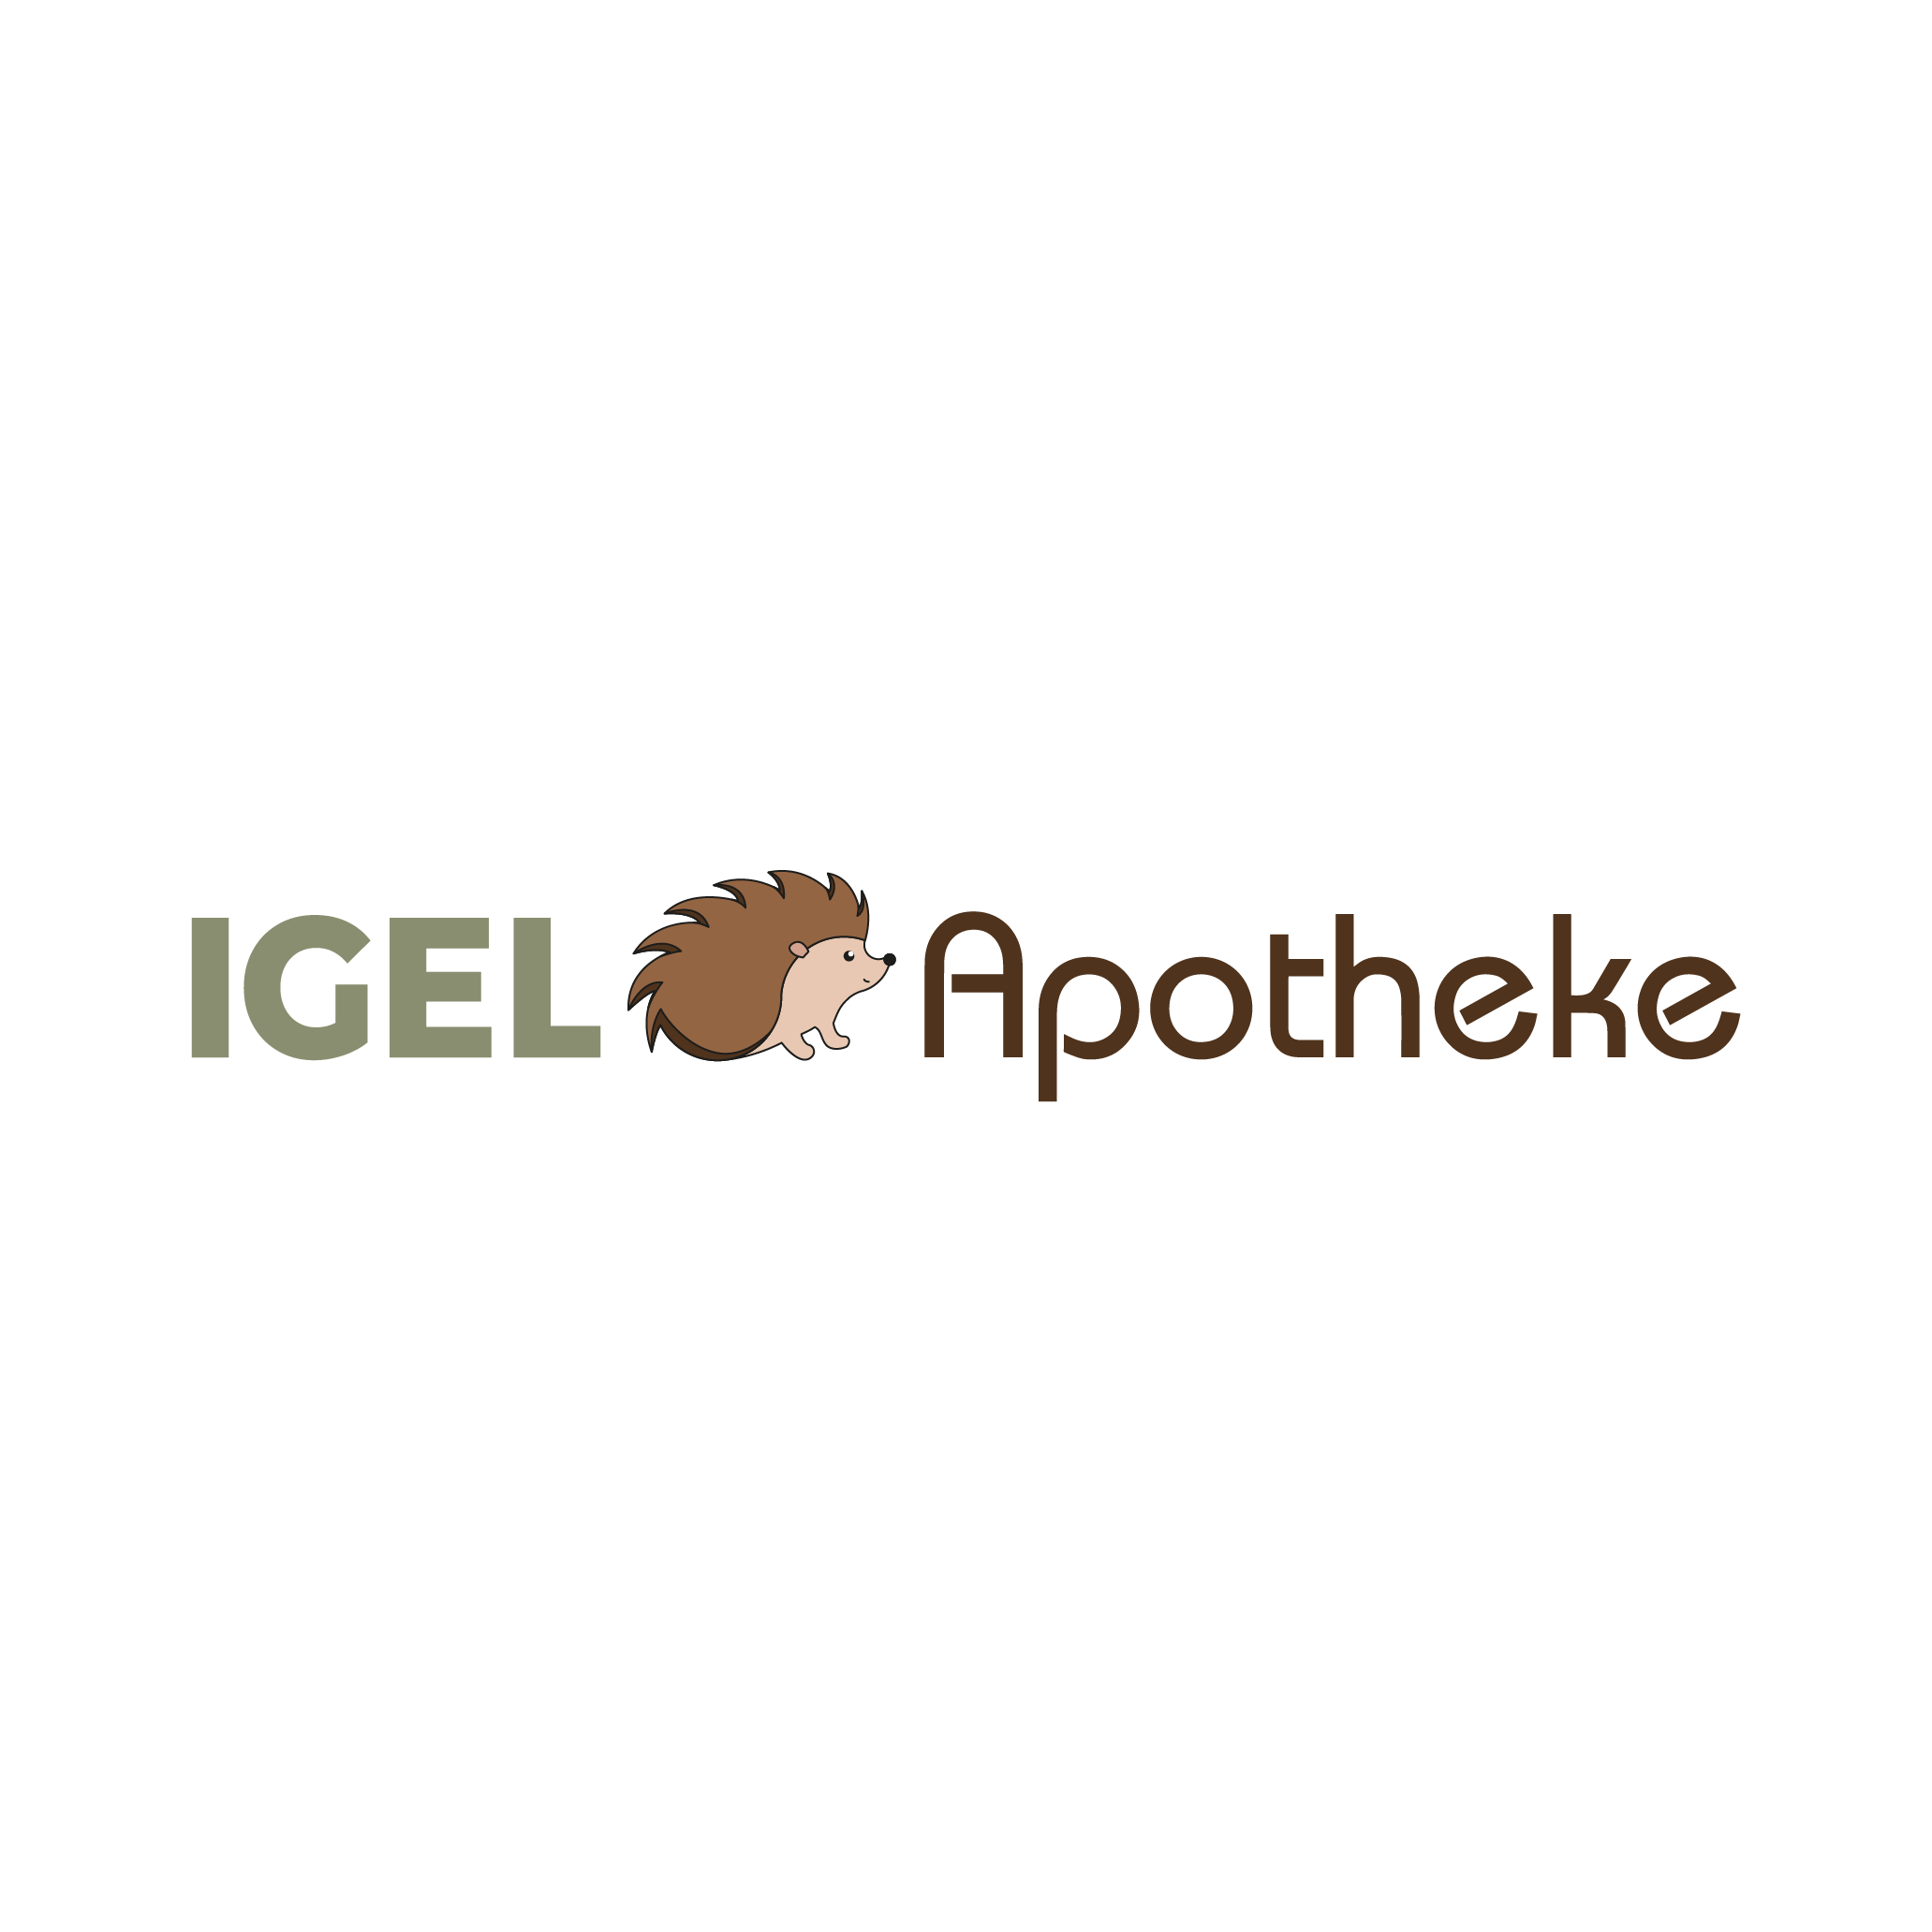 Igel-Apotheke in Bremen - Logo